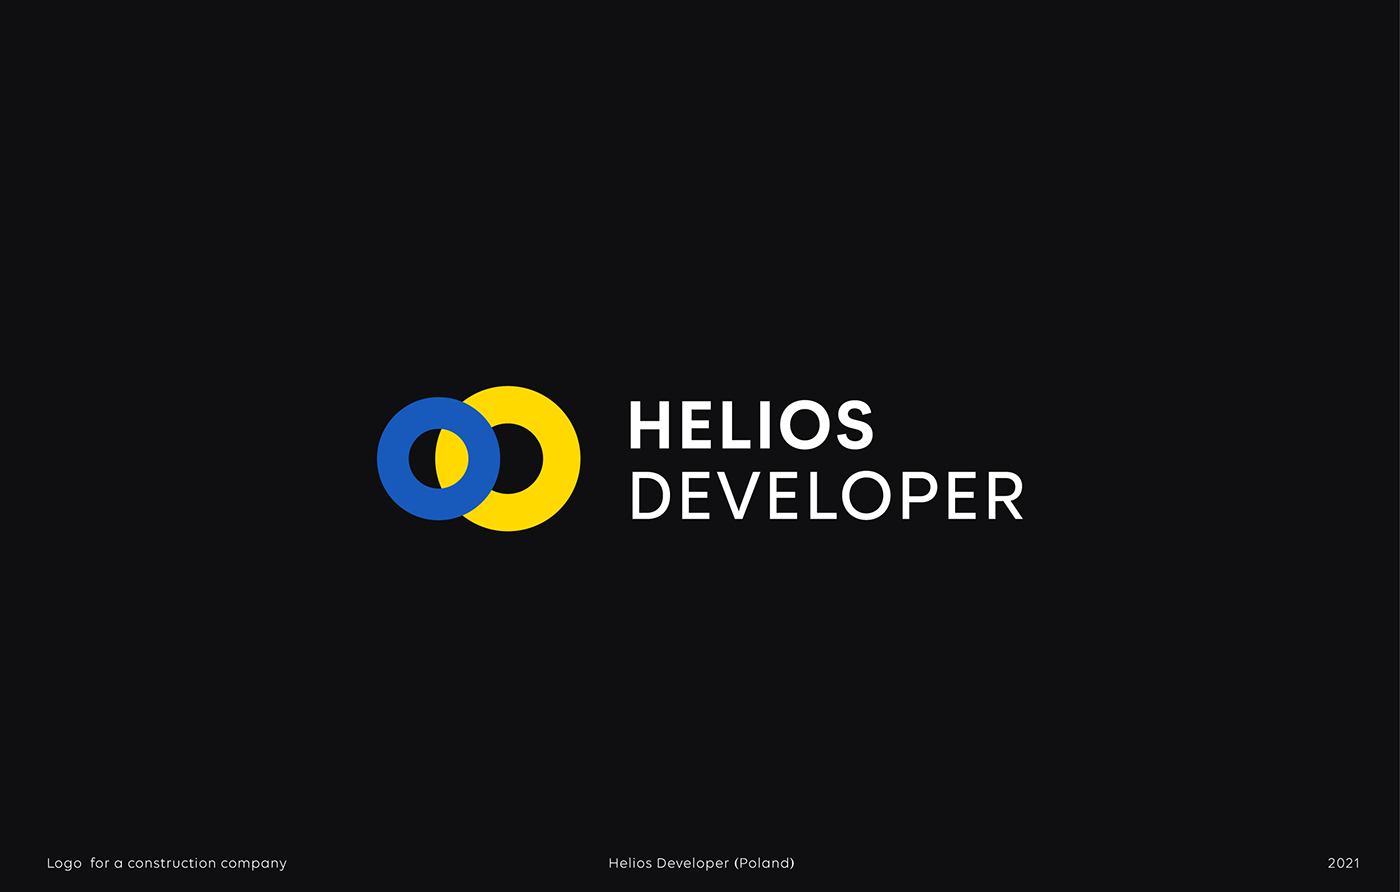 Helios Developer logo project. Valeria Agafonova